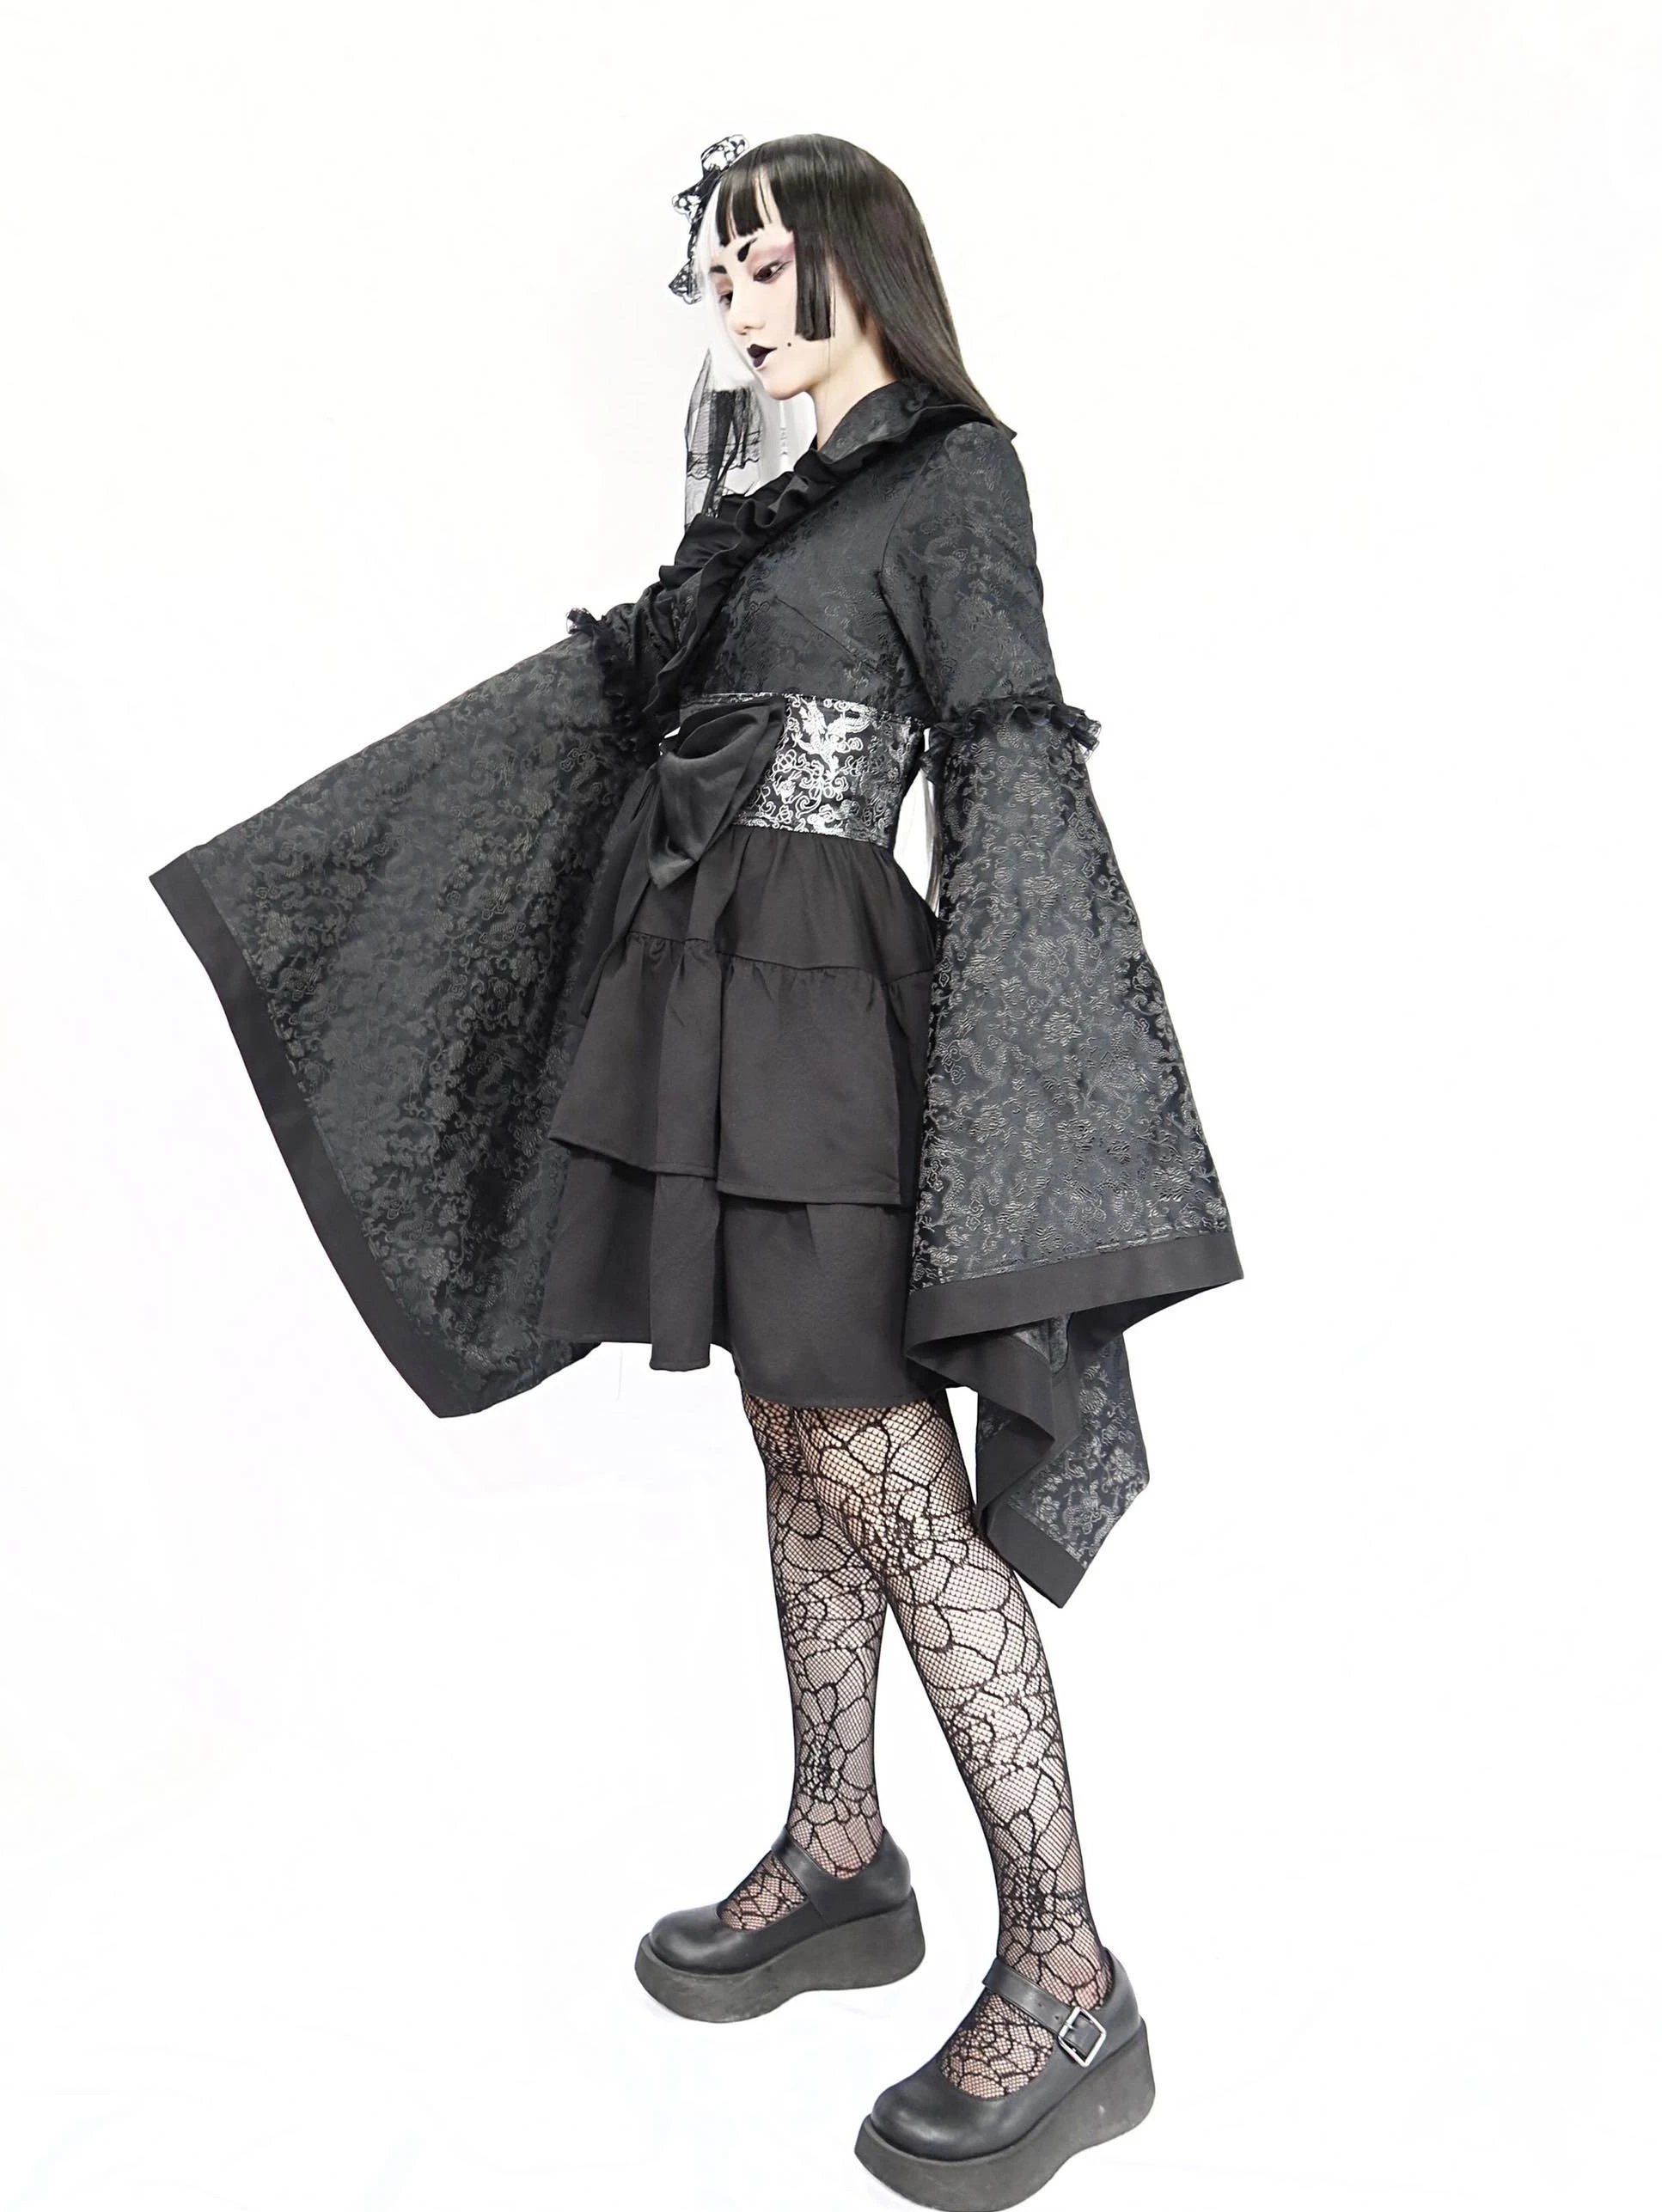 Oprindelige Design Gotisk Stil Mørk Sort Vibrationer Ærme Kimono Kjole Dragon Blonder Butterfly Mini Kjole Kage